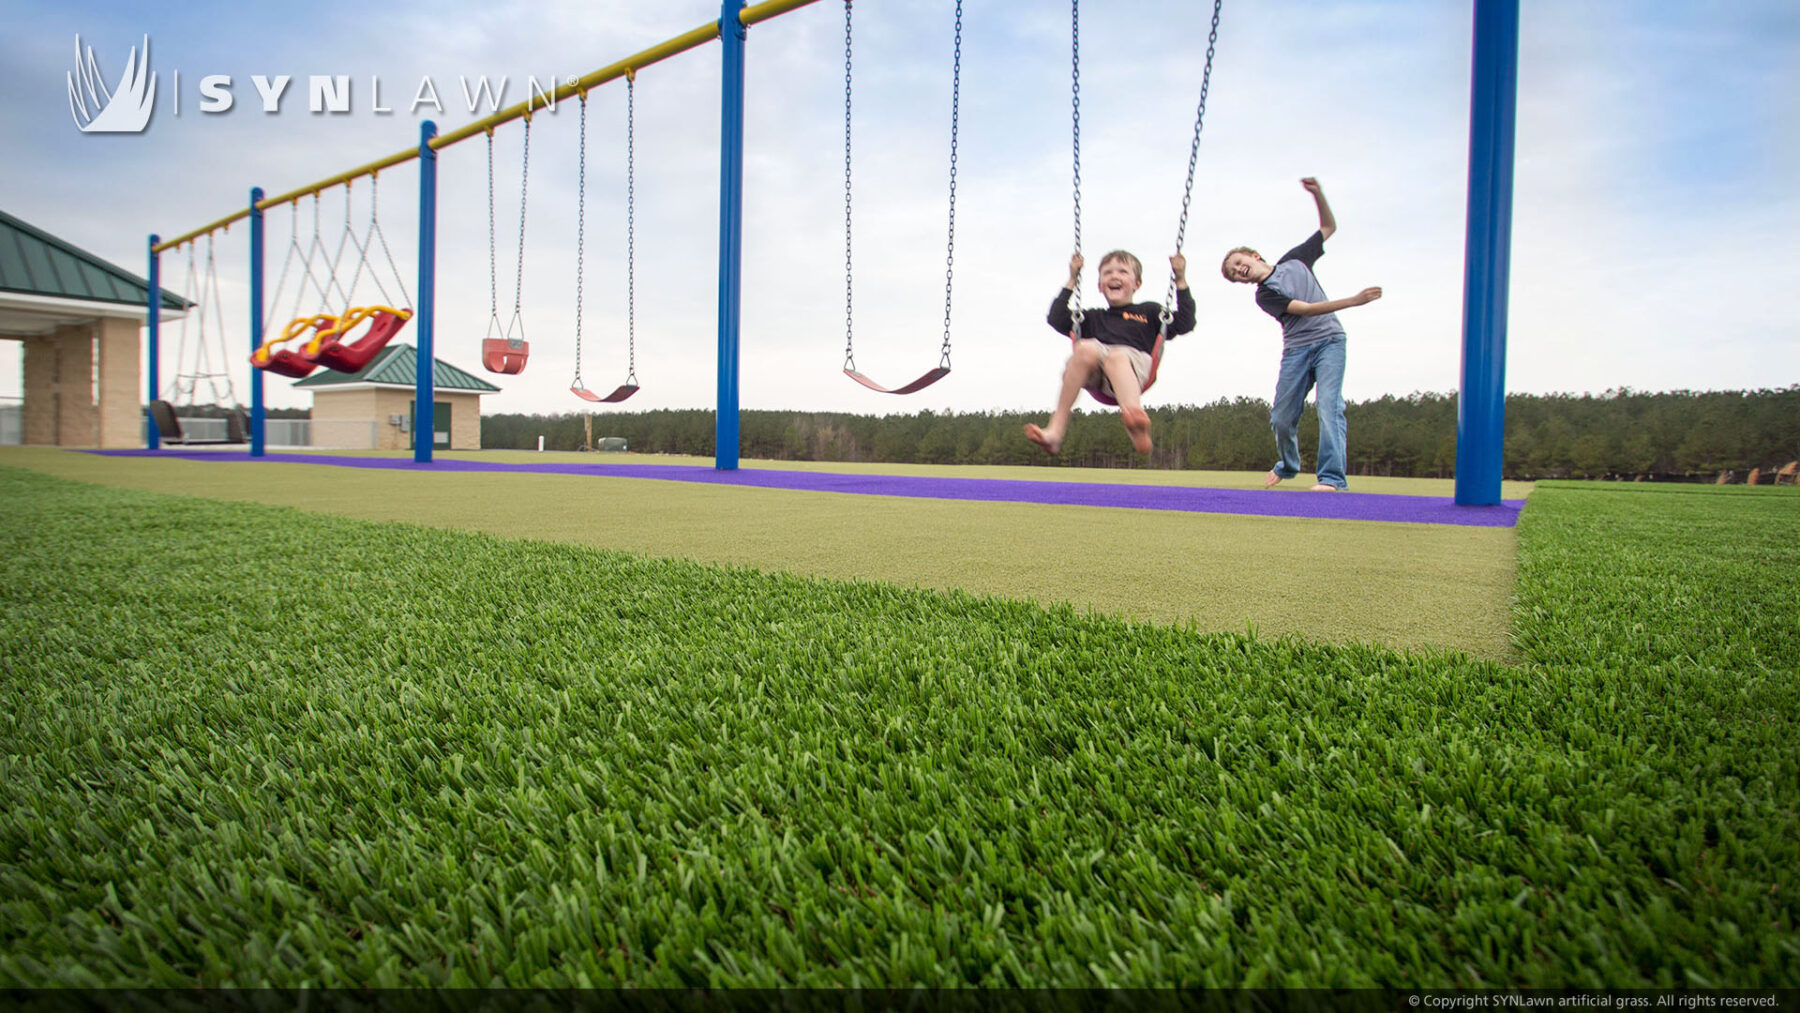 synlawn artificial grass, new york playground installations